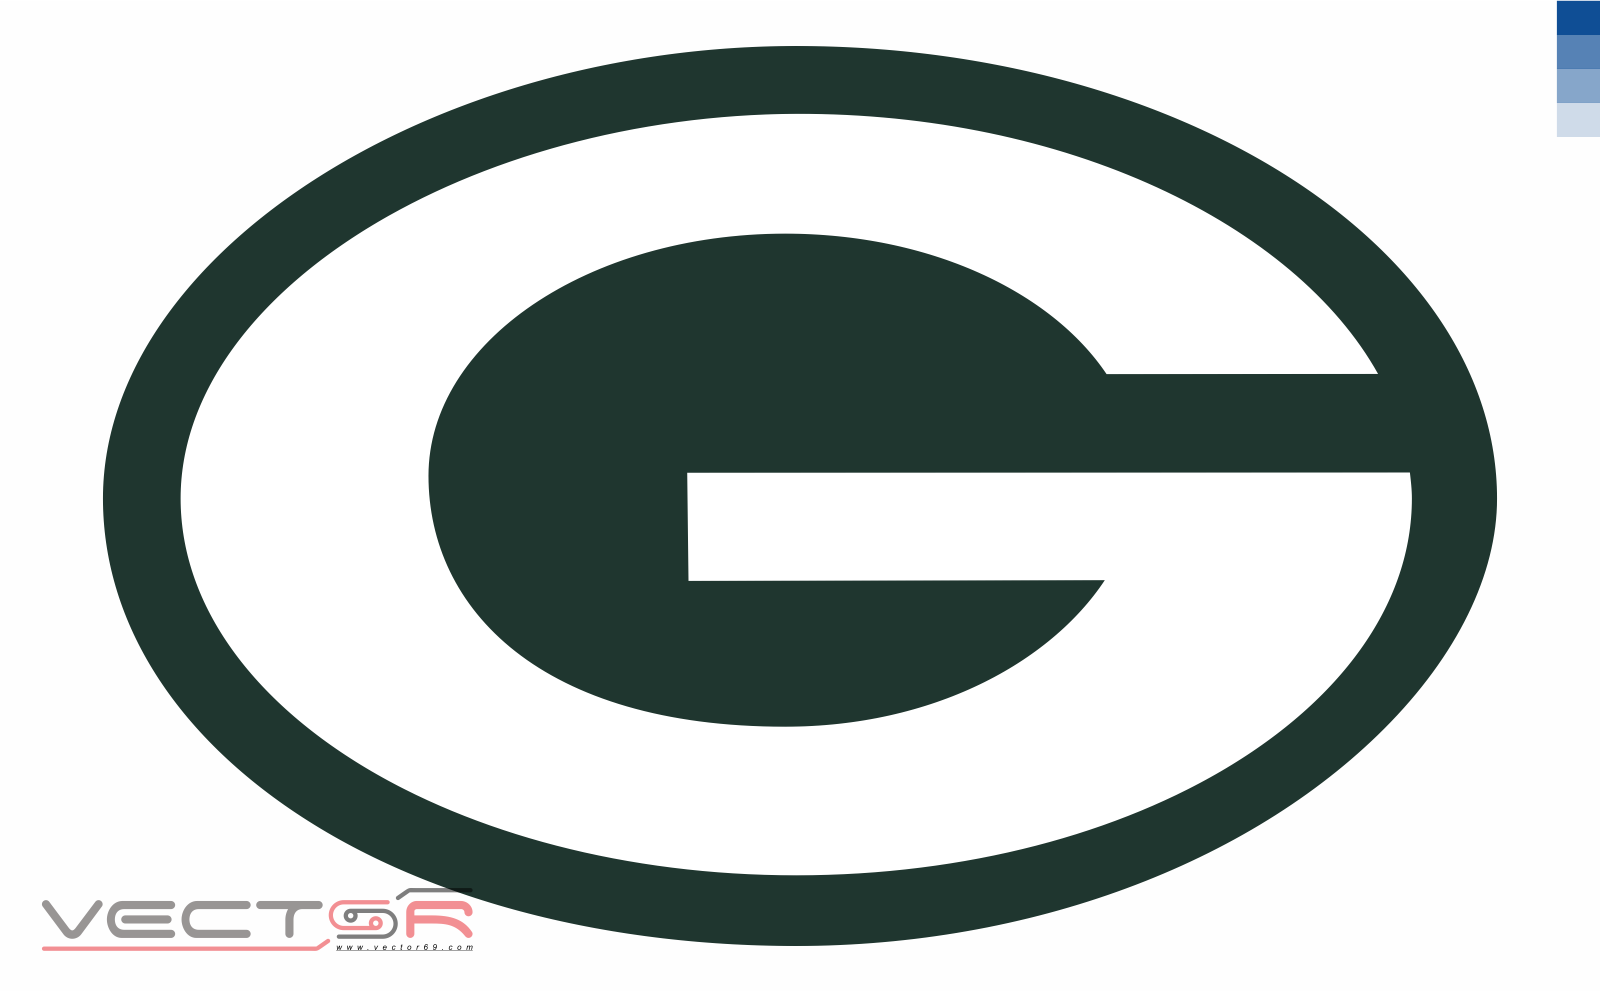 Green Bay Packers 1961-1979 Logo - Download Vector File Encapsulated PostScript (.EPS)